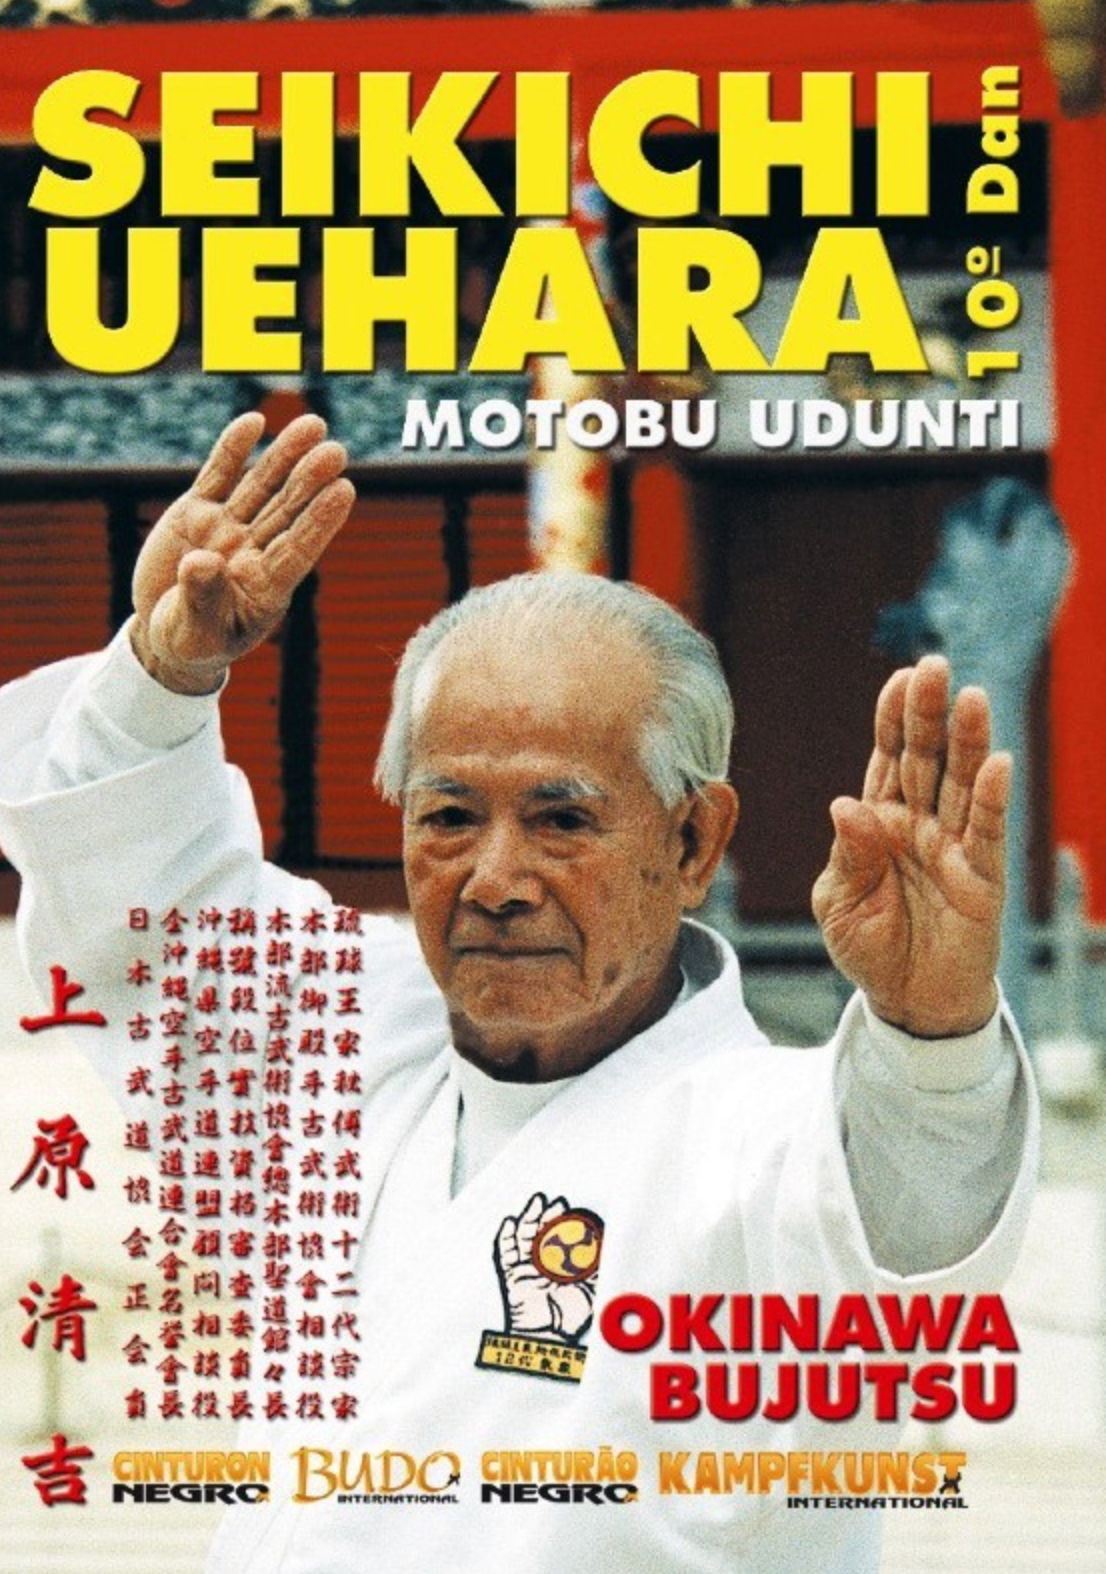 Okinawa Bujutsu Motobu Udunti DVD with Seikichi Uehara - Budovideos Inc